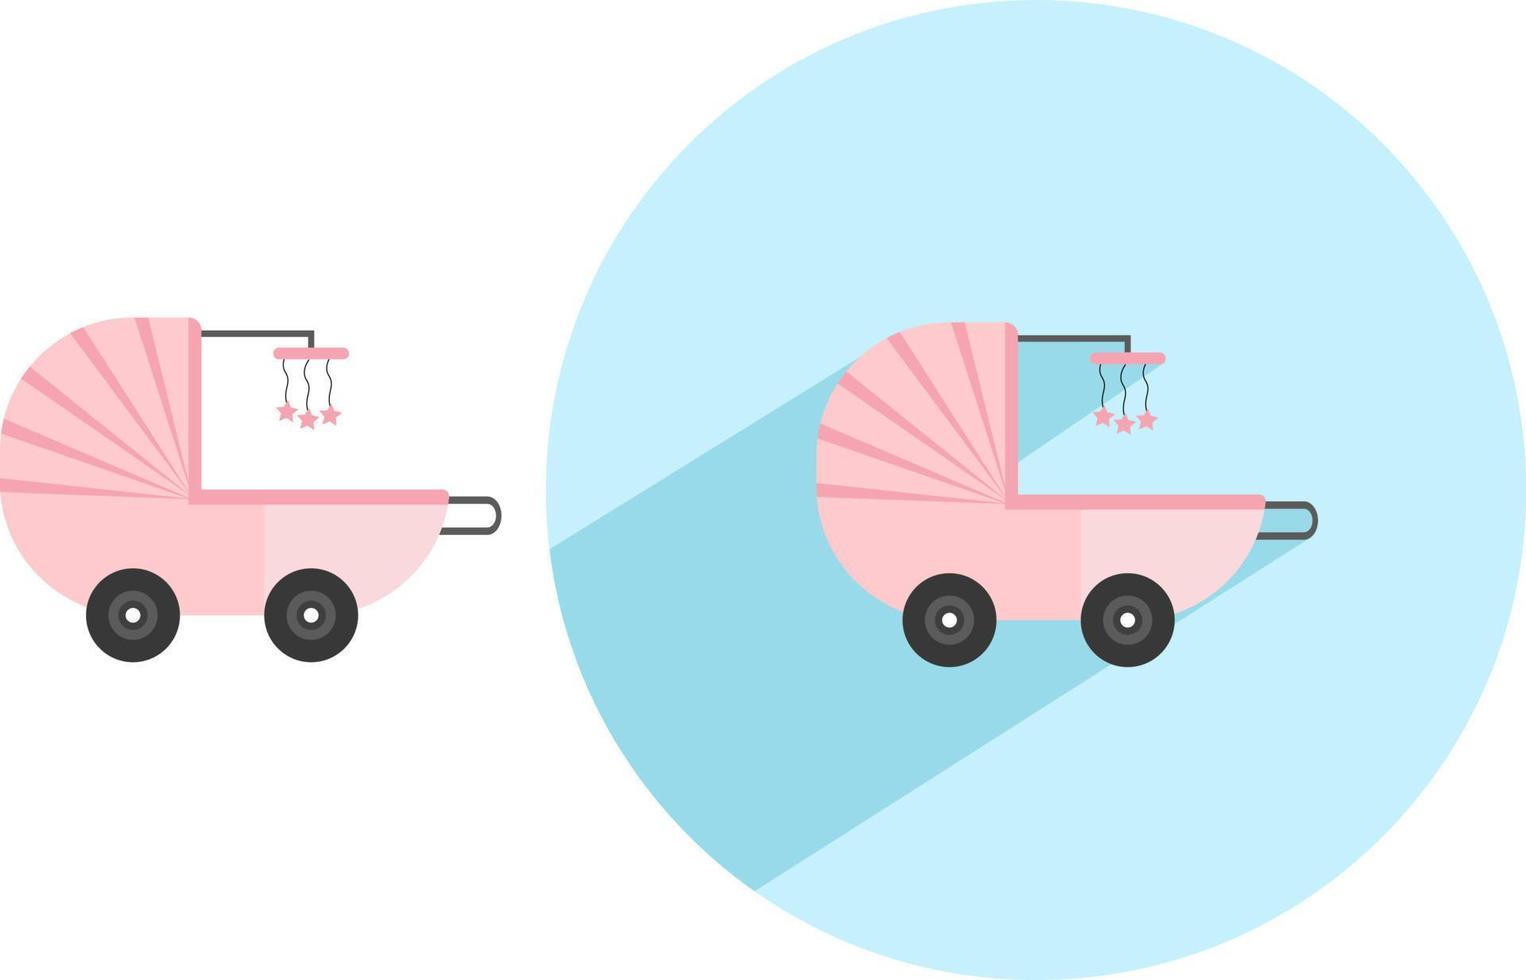 bebis vagn ,illustration, vektor på vit bakgrund.